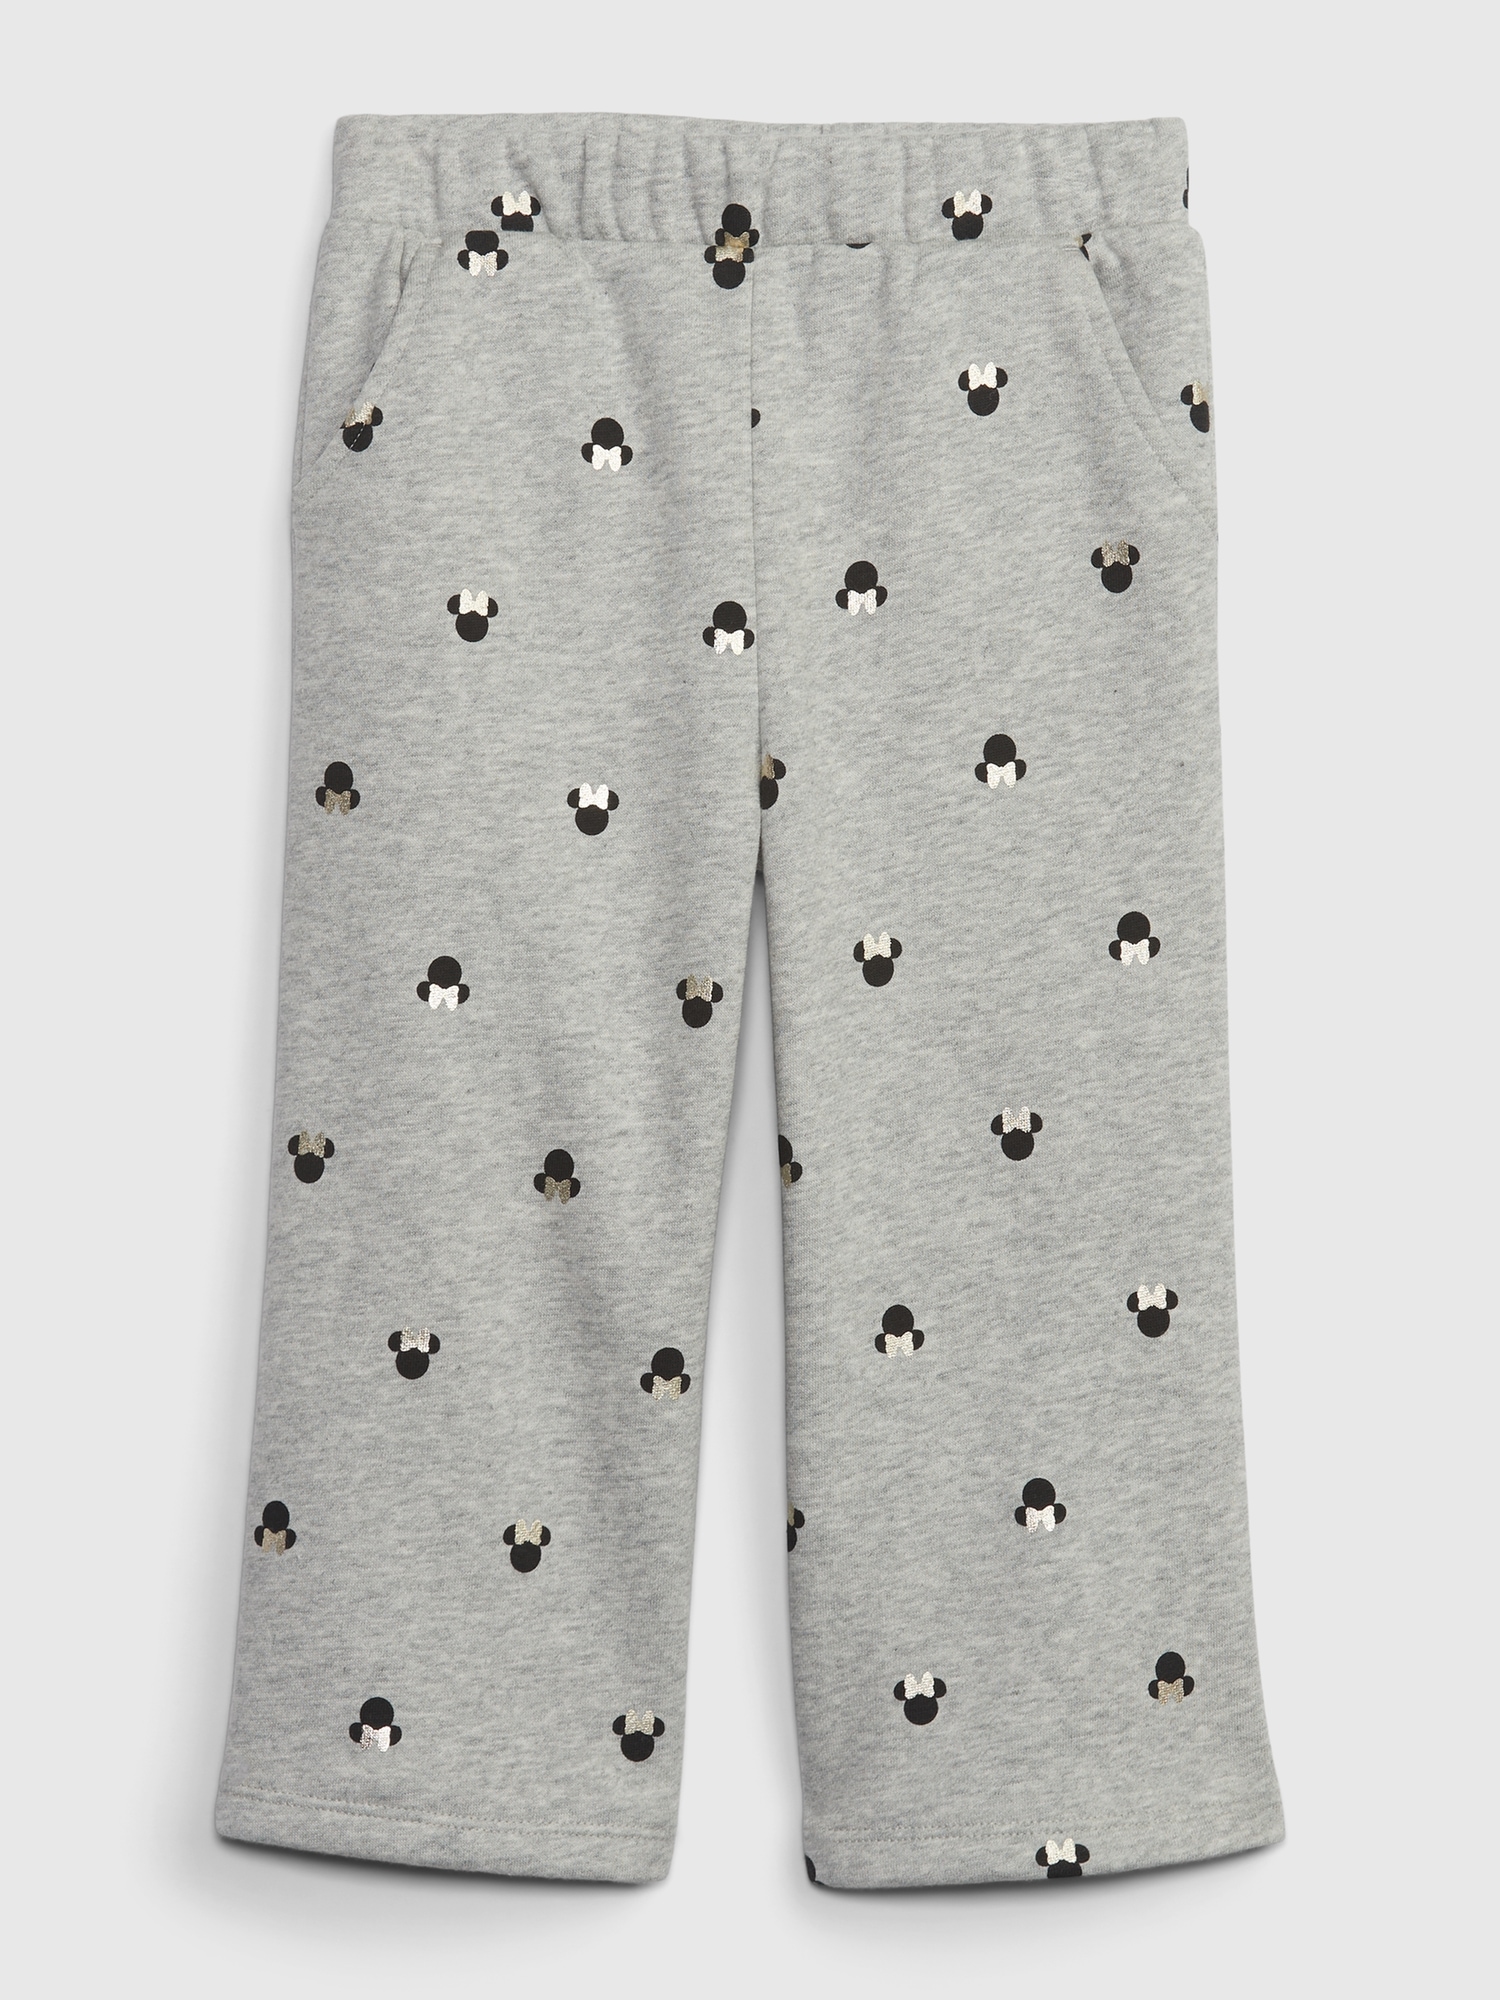 Gap - babyGap | Disney Minnie Mouse Pull-On Sweatpants gray